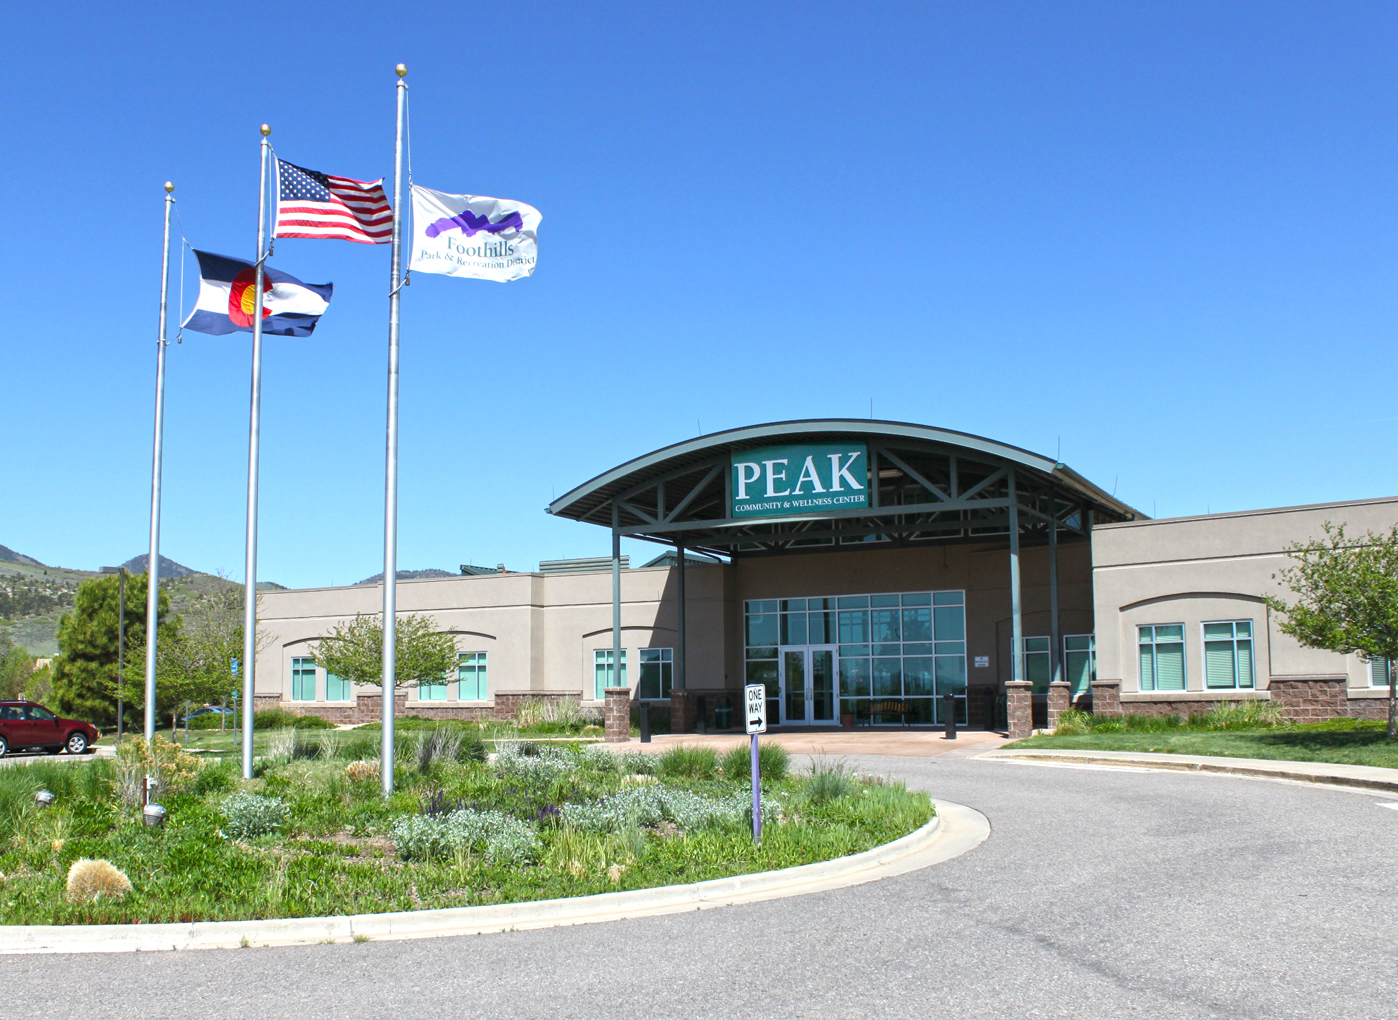 Image of the Peak Community & Wellness Center building.